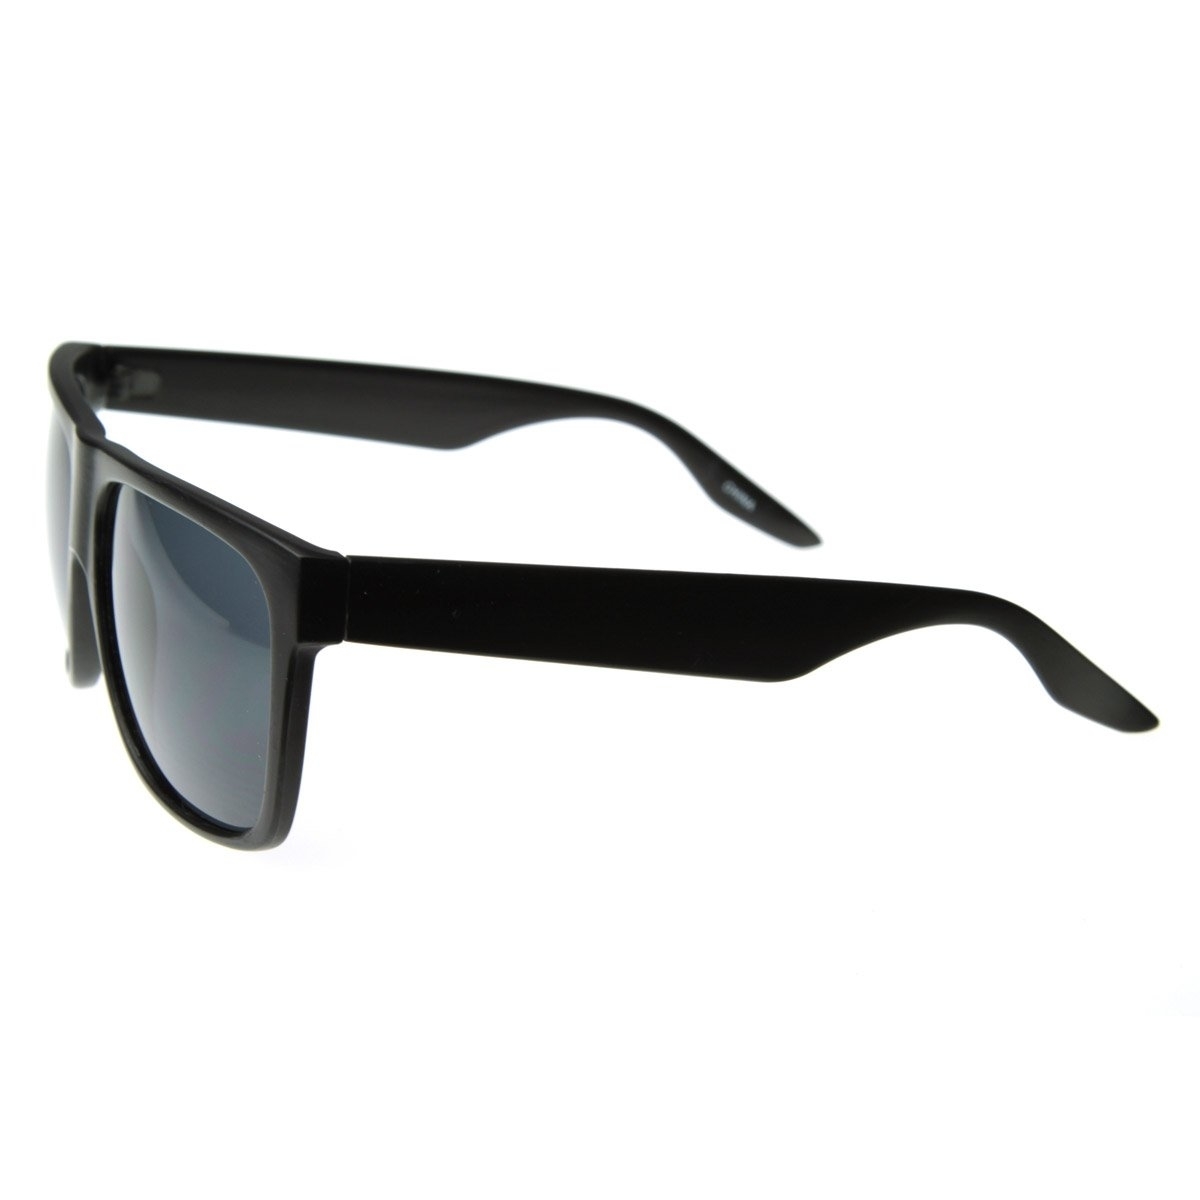 Casual Shades Menswear Plastic Flat Top Horn Rimmed Style Sunglasses Eyewear - Matte Black